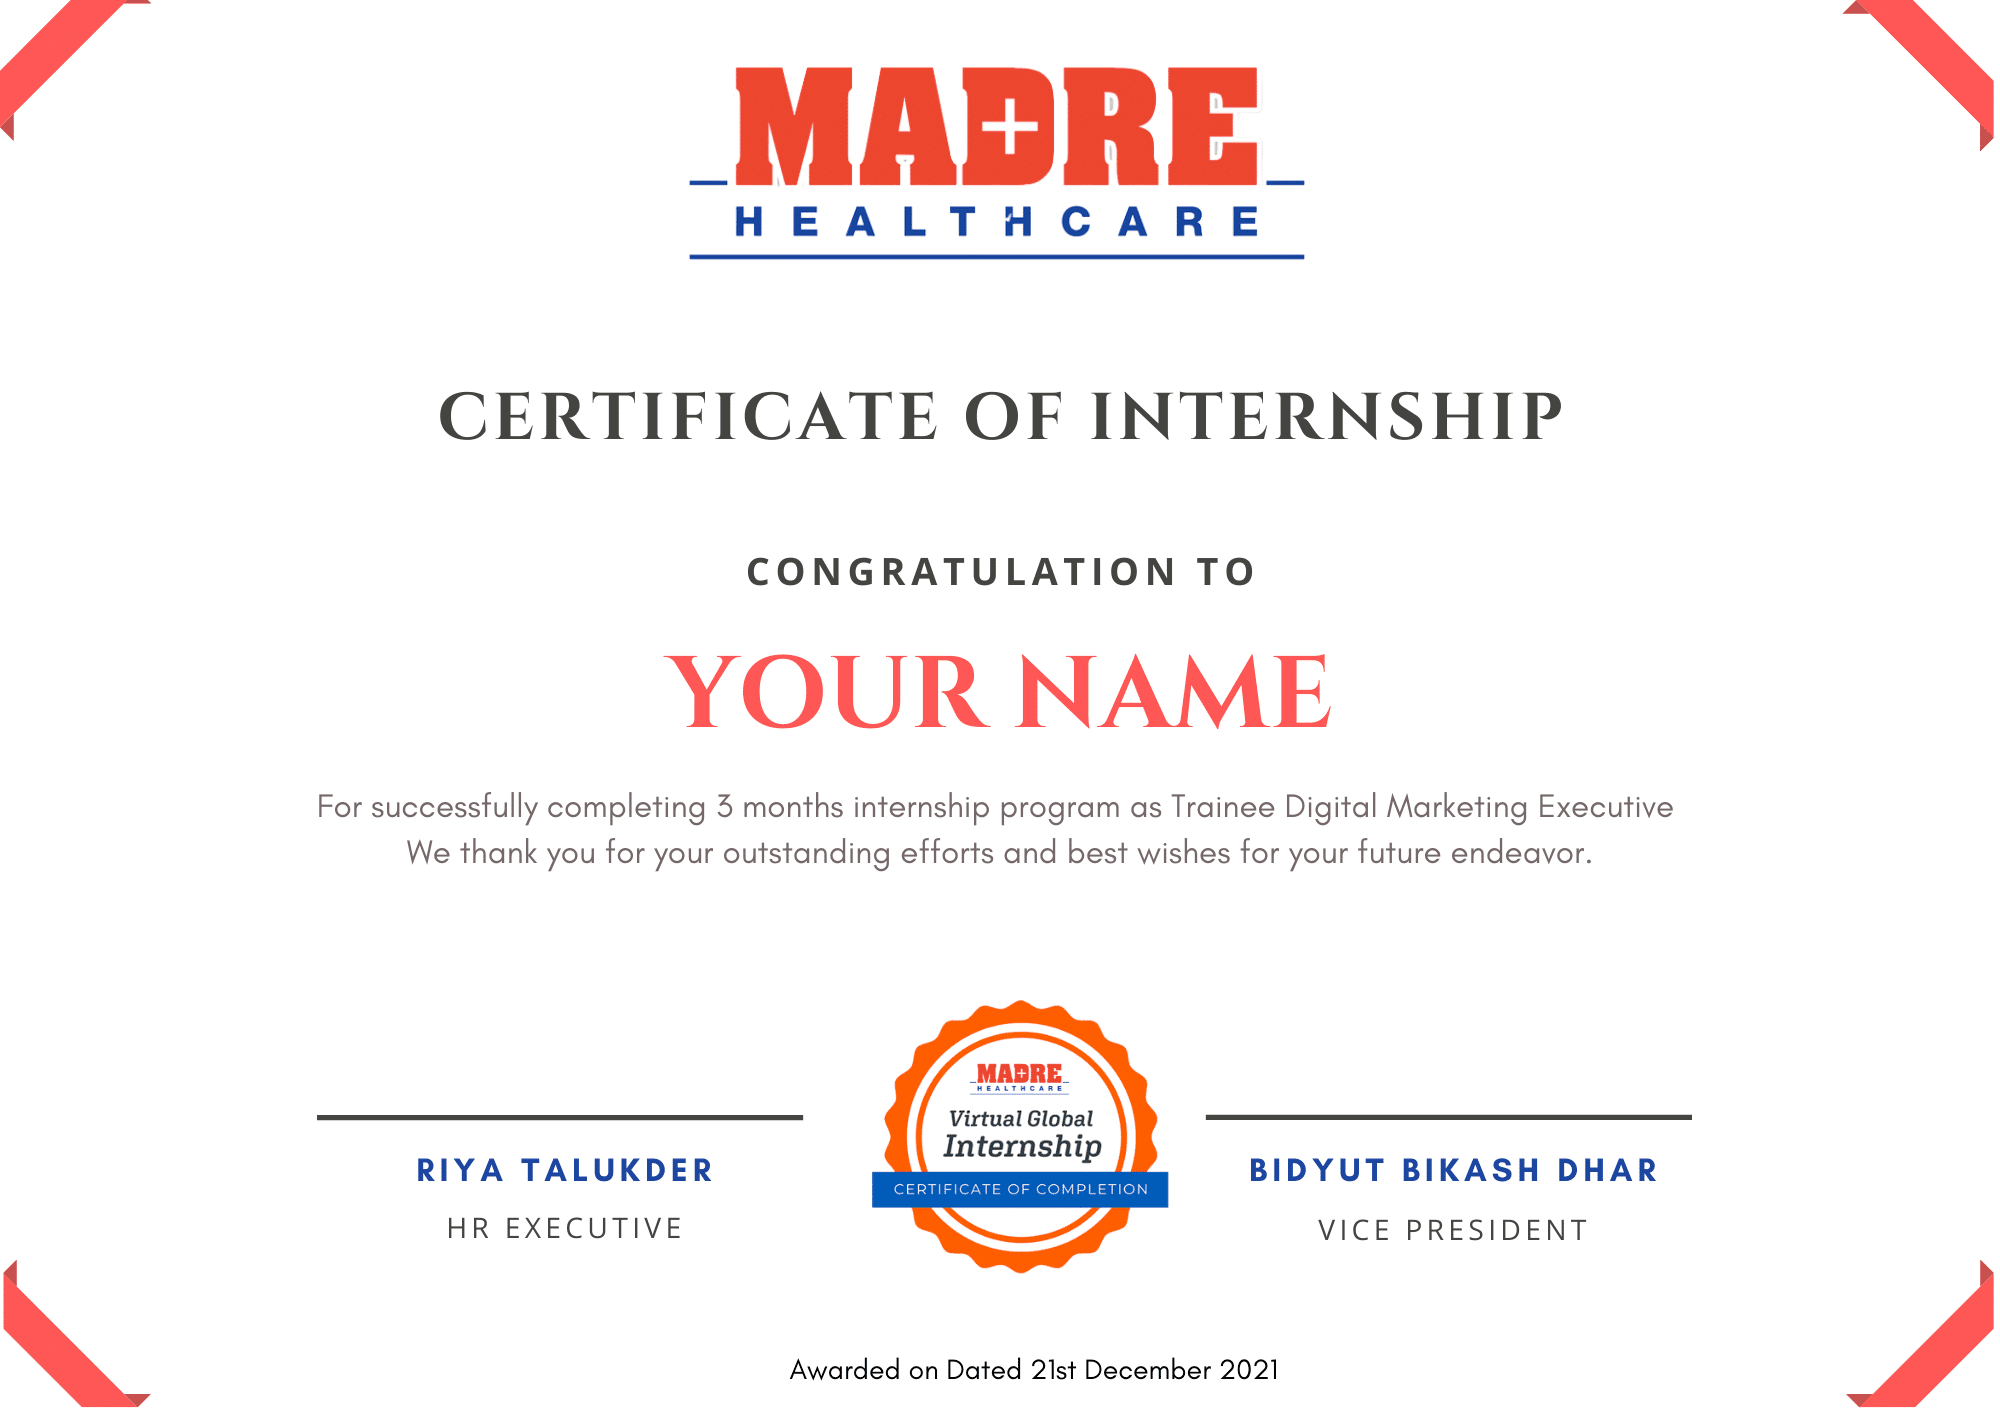 Certificate of Internship - MADRE Healthcare